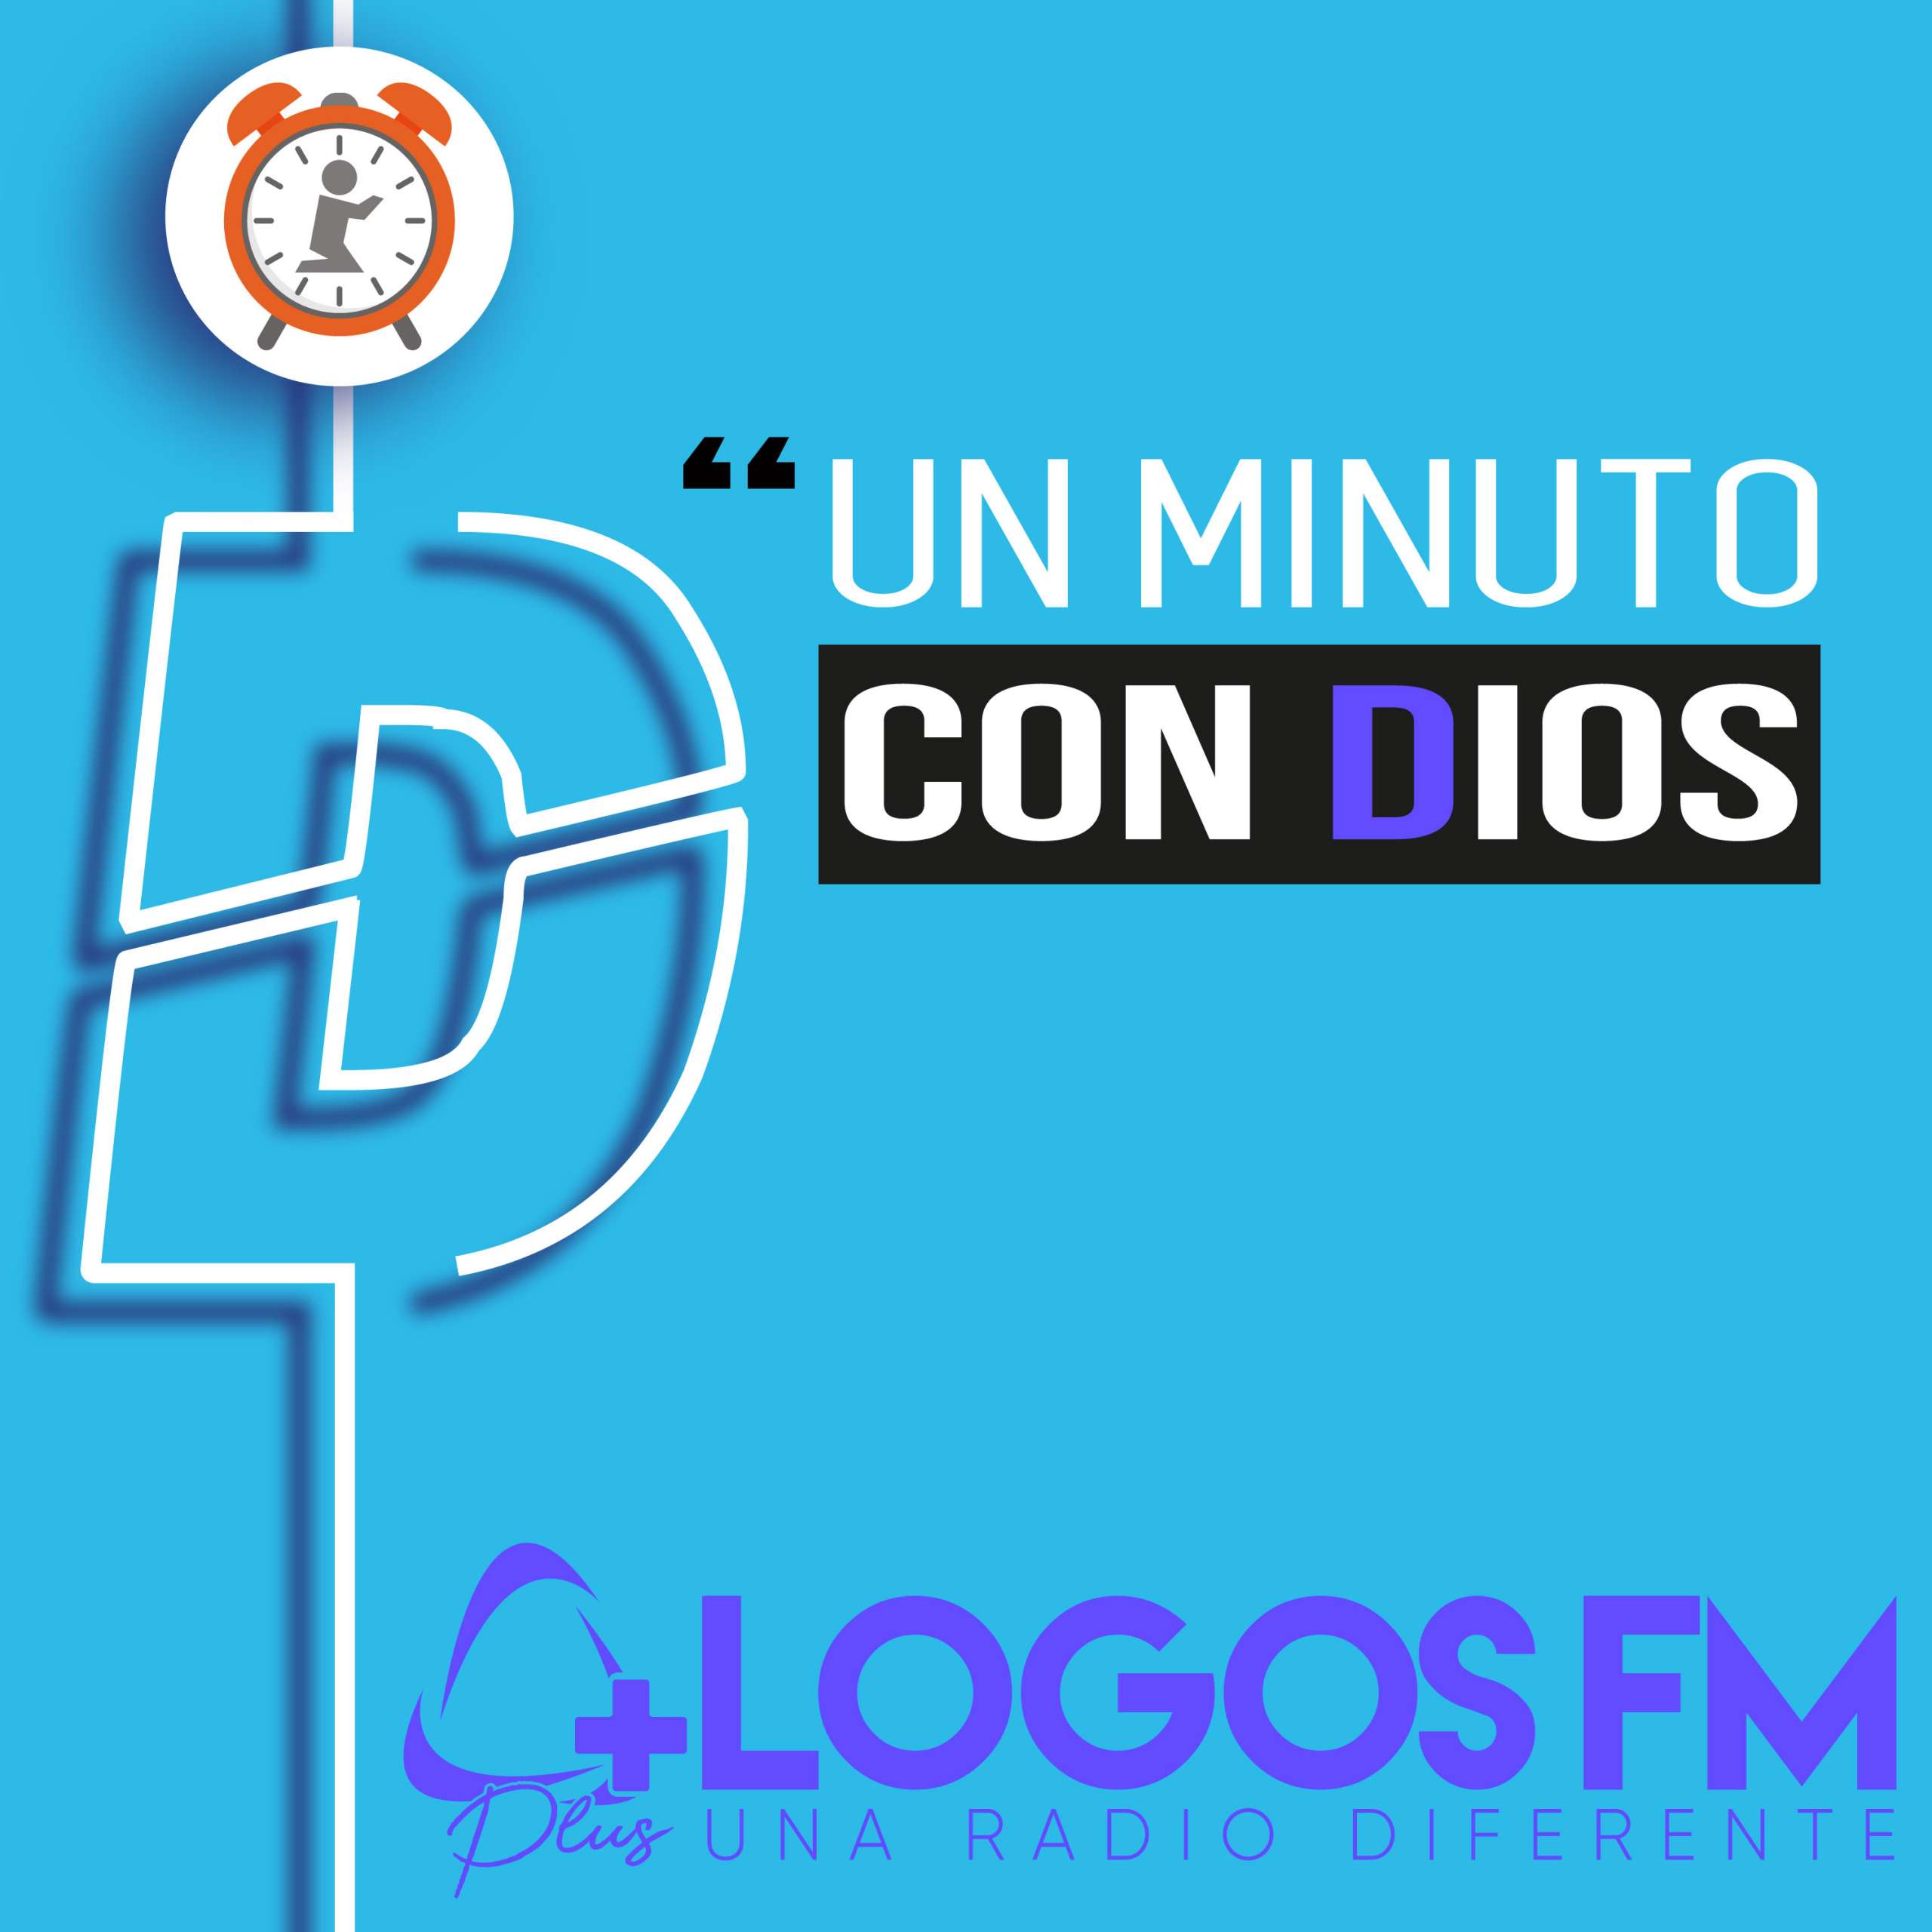 Un minuto con Dios - Episodio 456 - Loida Vargas